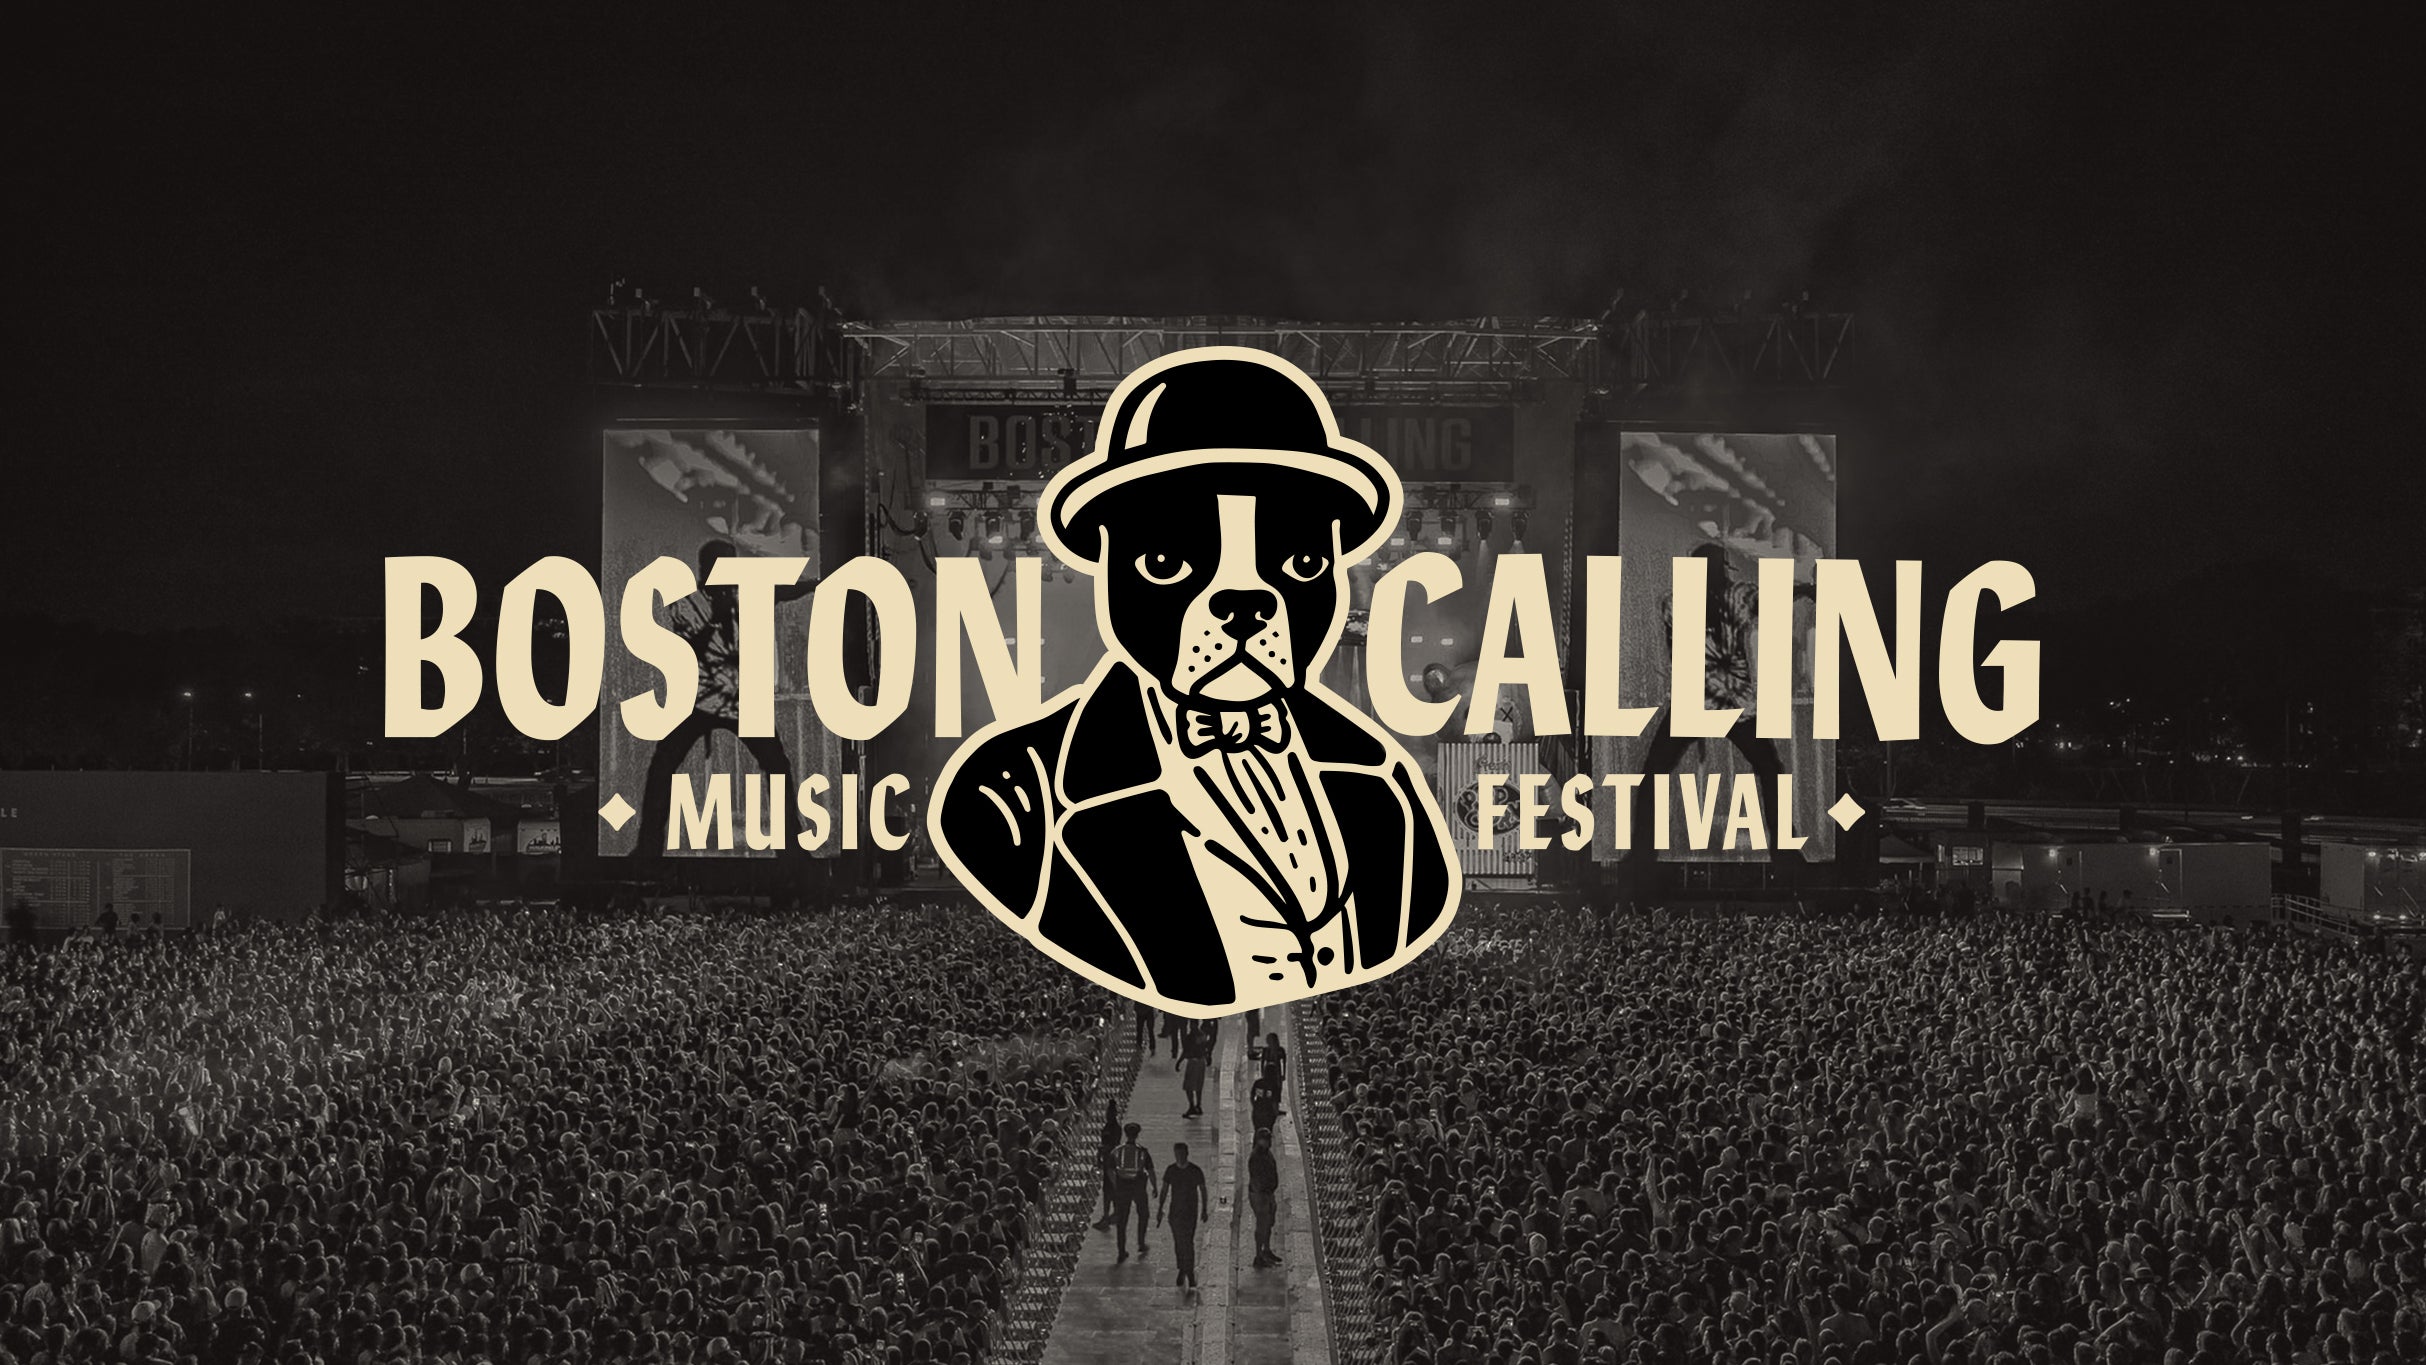 Boston Calling Music Festival at HARVARD ATHLETIC COMPLEX